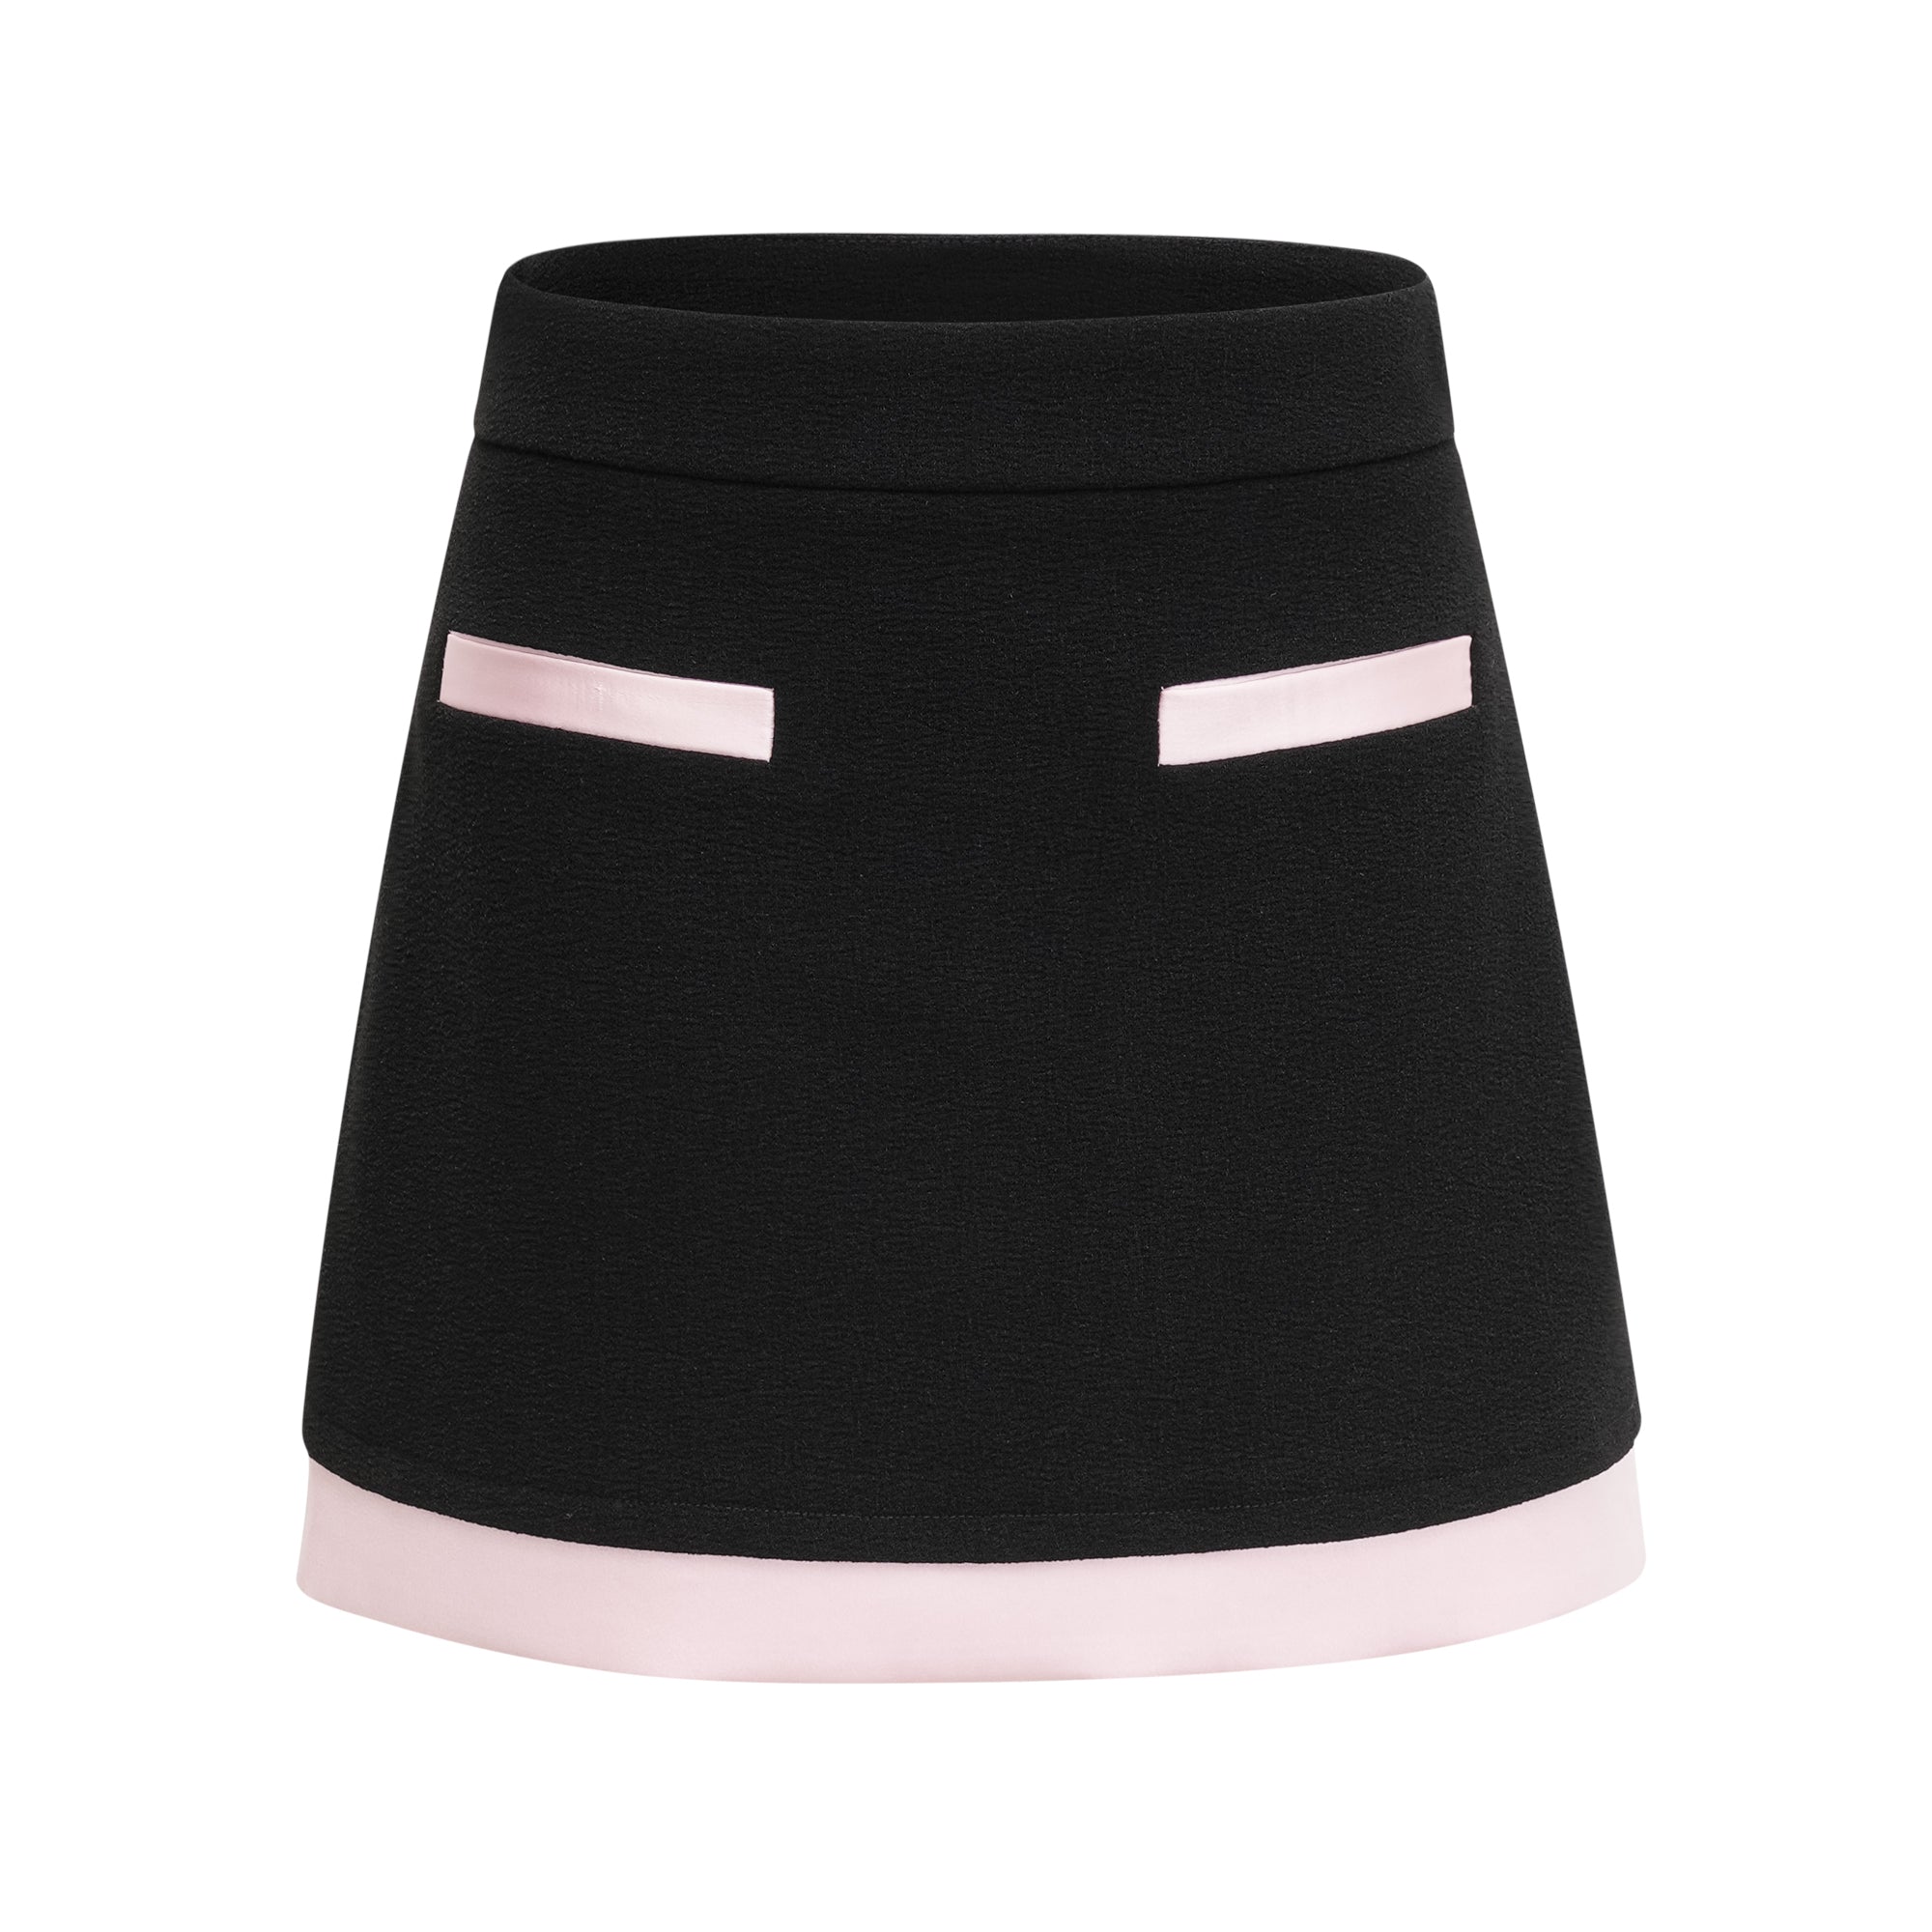 Miss Rosier jacket & skirt matching set - Miss Rosier - Women's Online Boutique